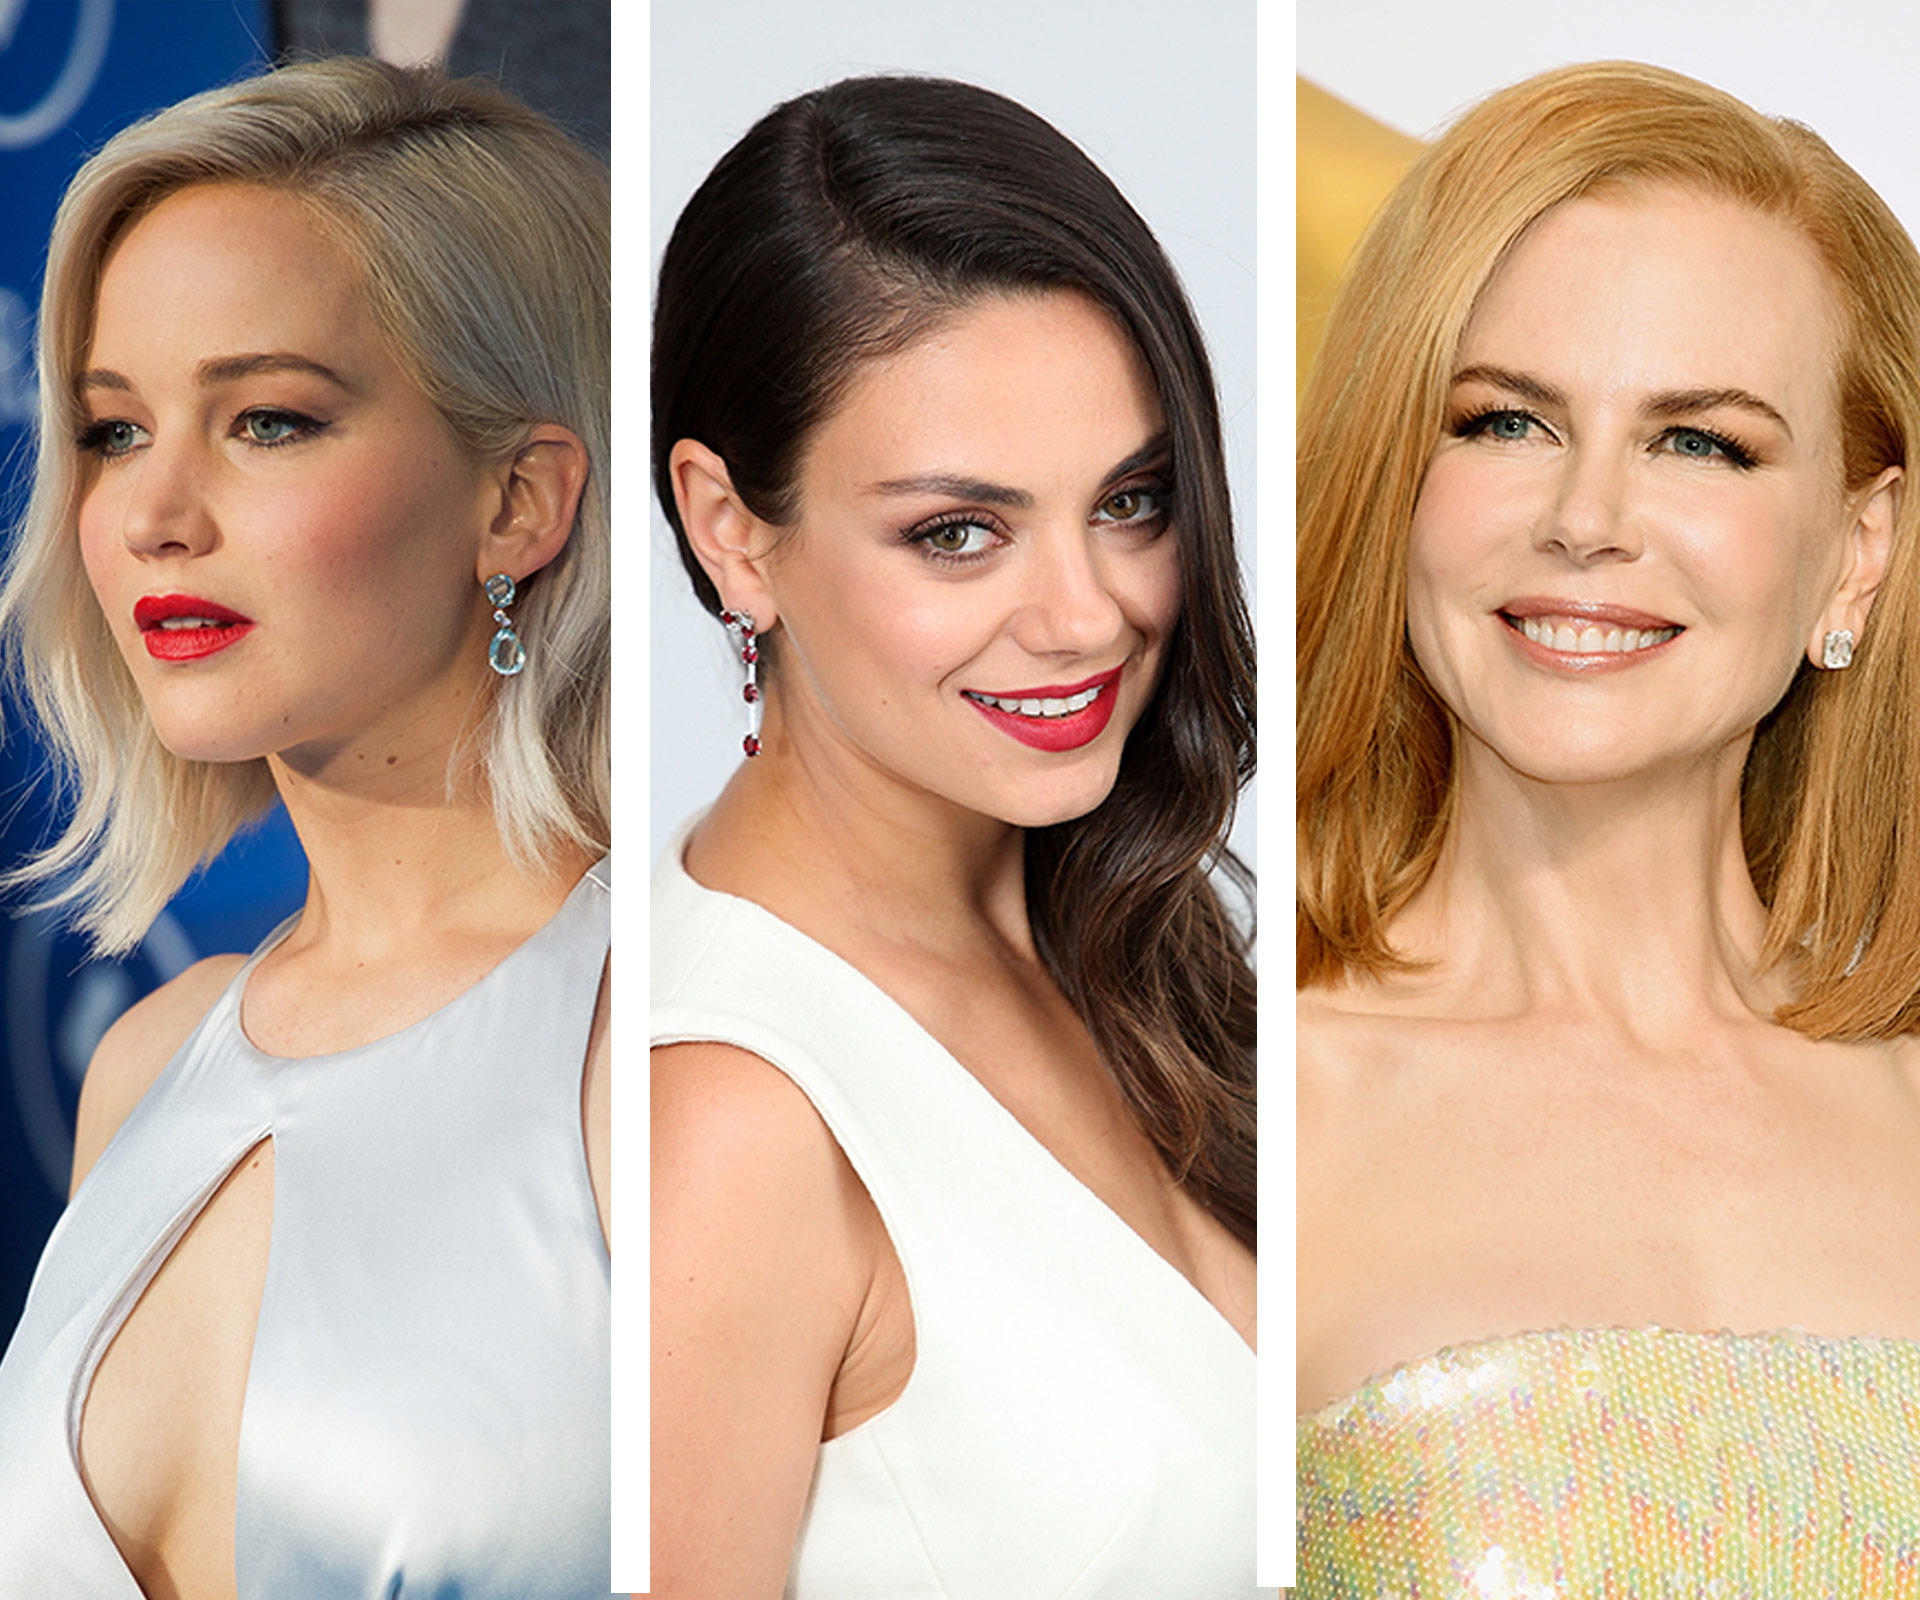 Jennifer Lawrence, Mila Kunis and Nicole Kidman